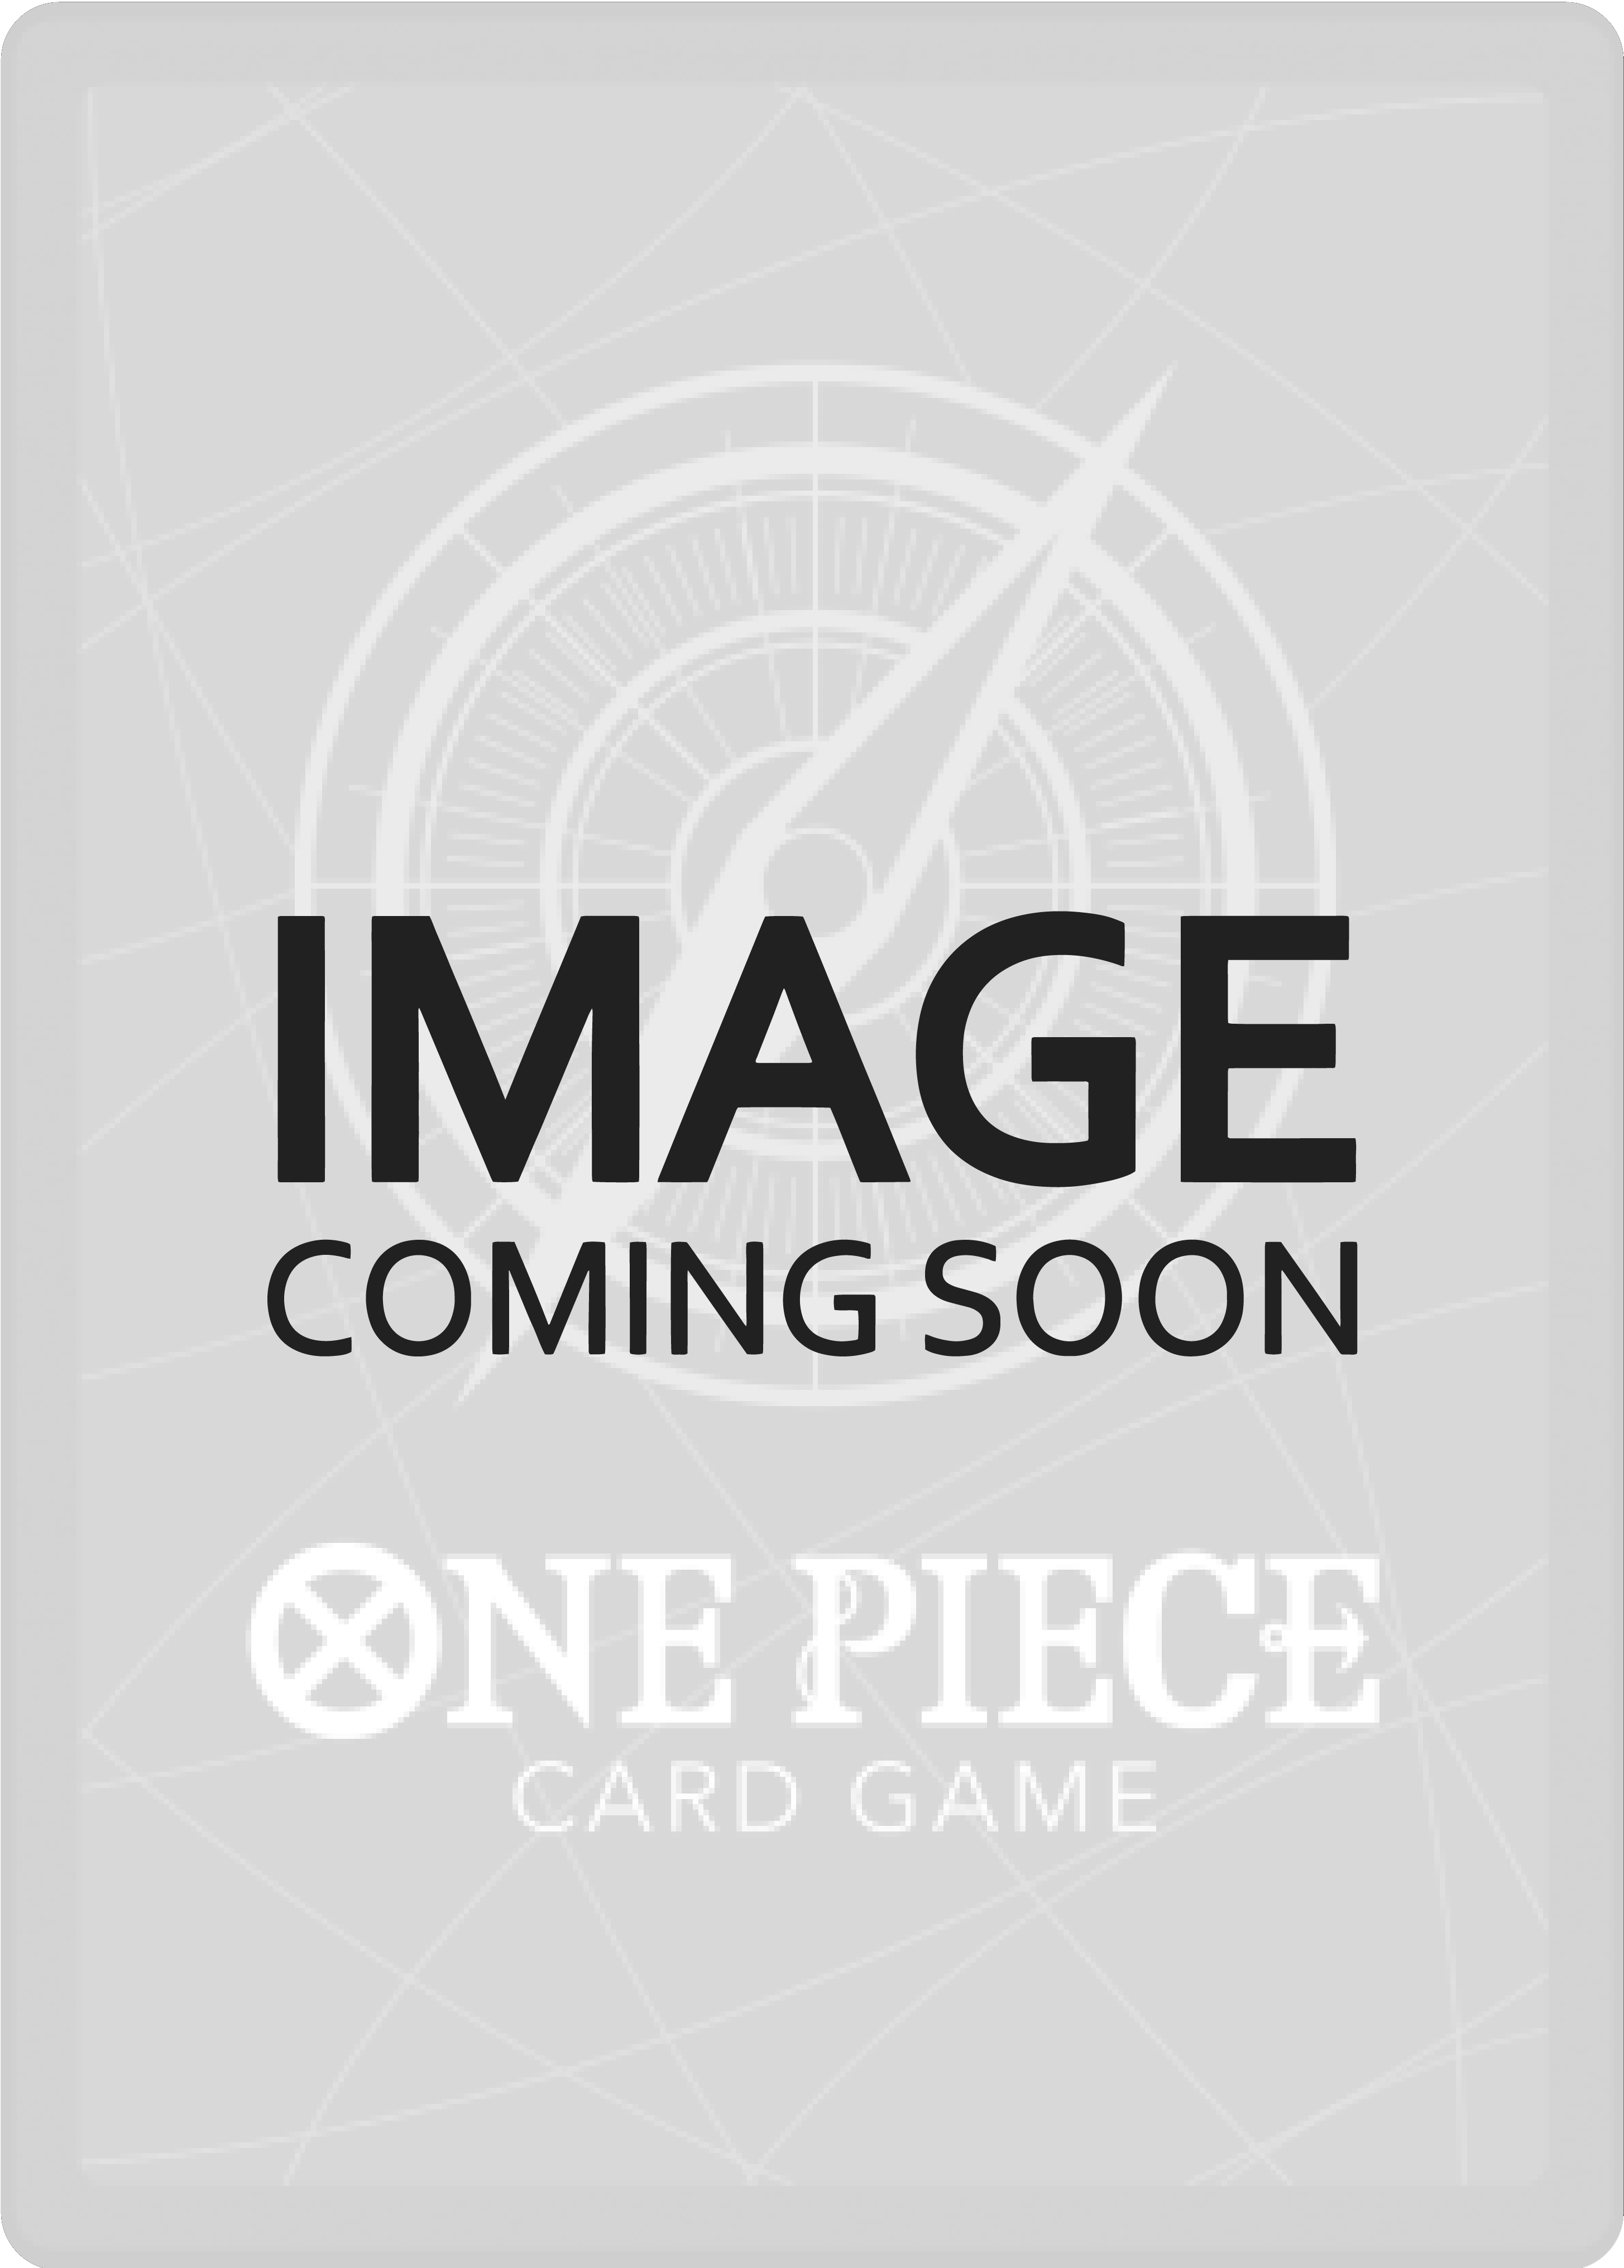 Helmeppo (Judge) [One Piece Promotion Cards]